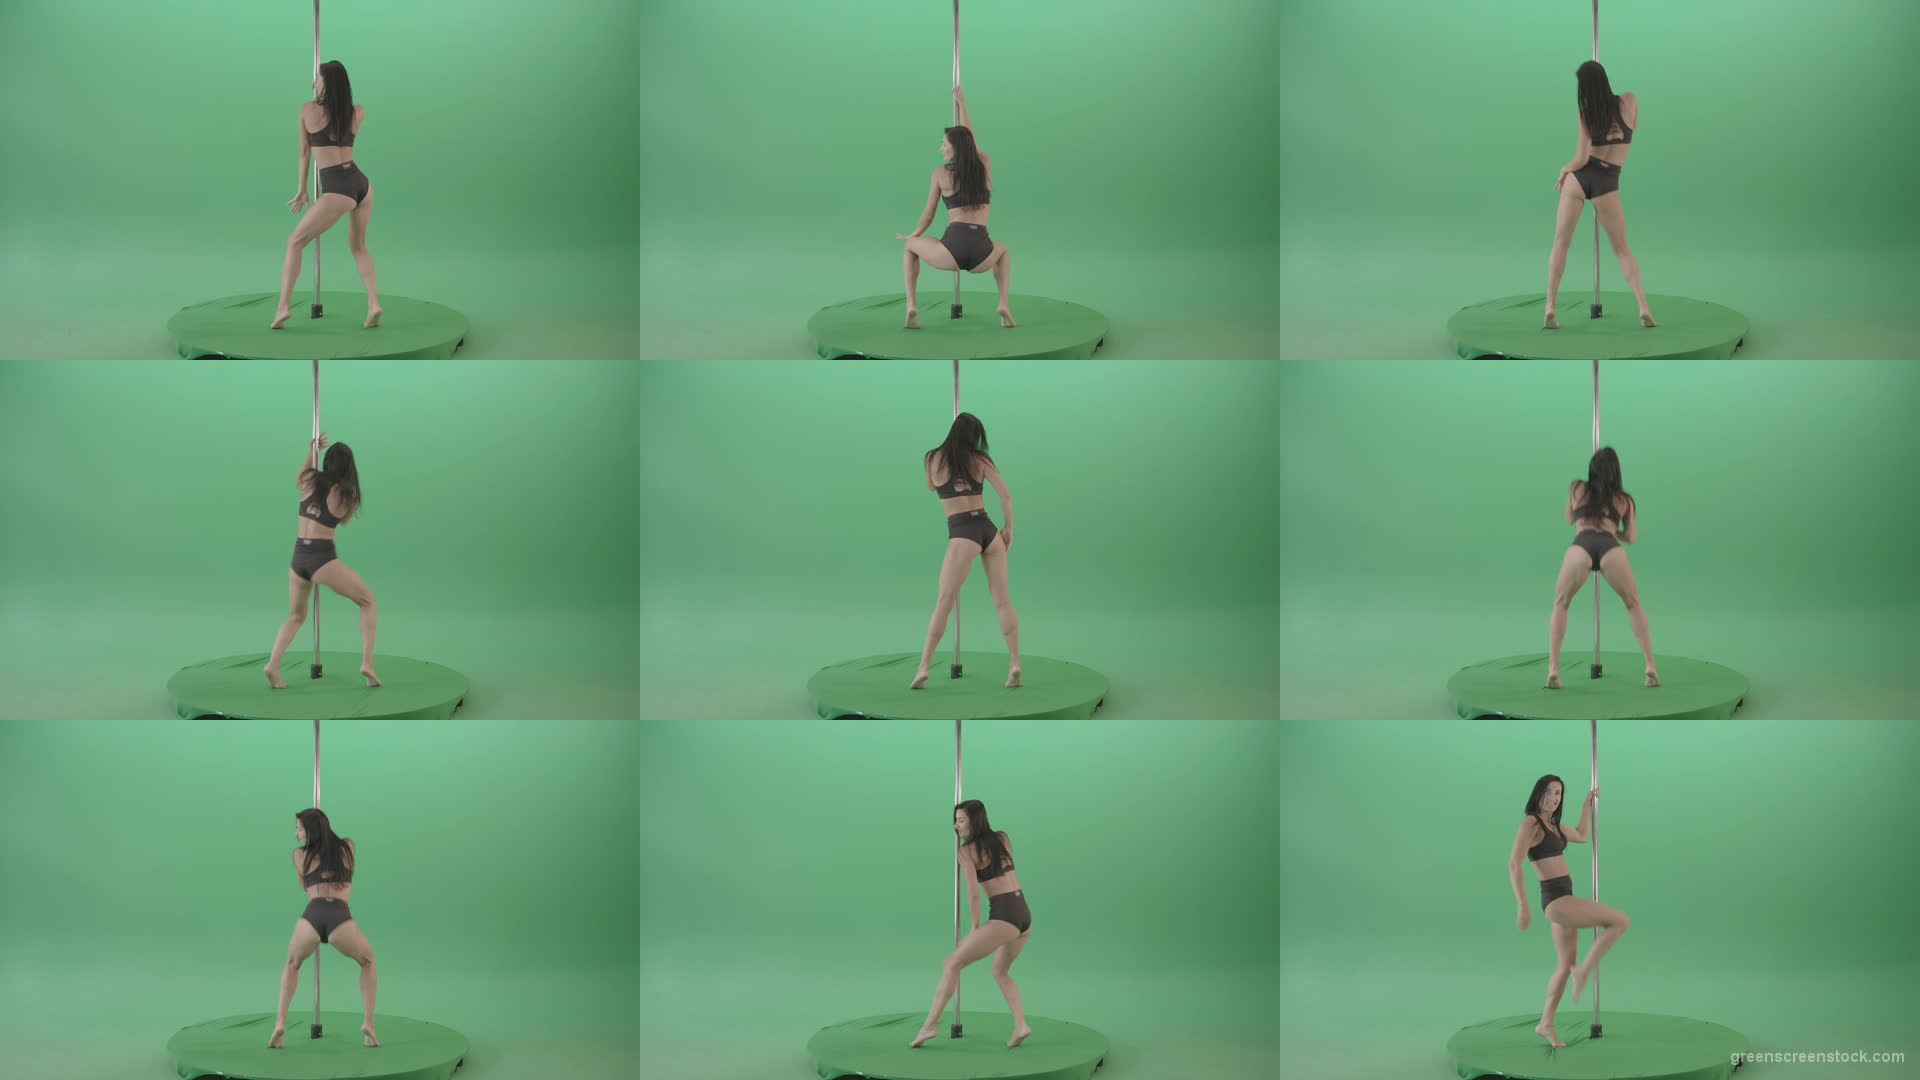 Brunette-Strip-Model-Girl-has-fun-on-dancing-pole-isolated-on-Green-Screen-4K-Video-Footage-1920 Green Screen Stock